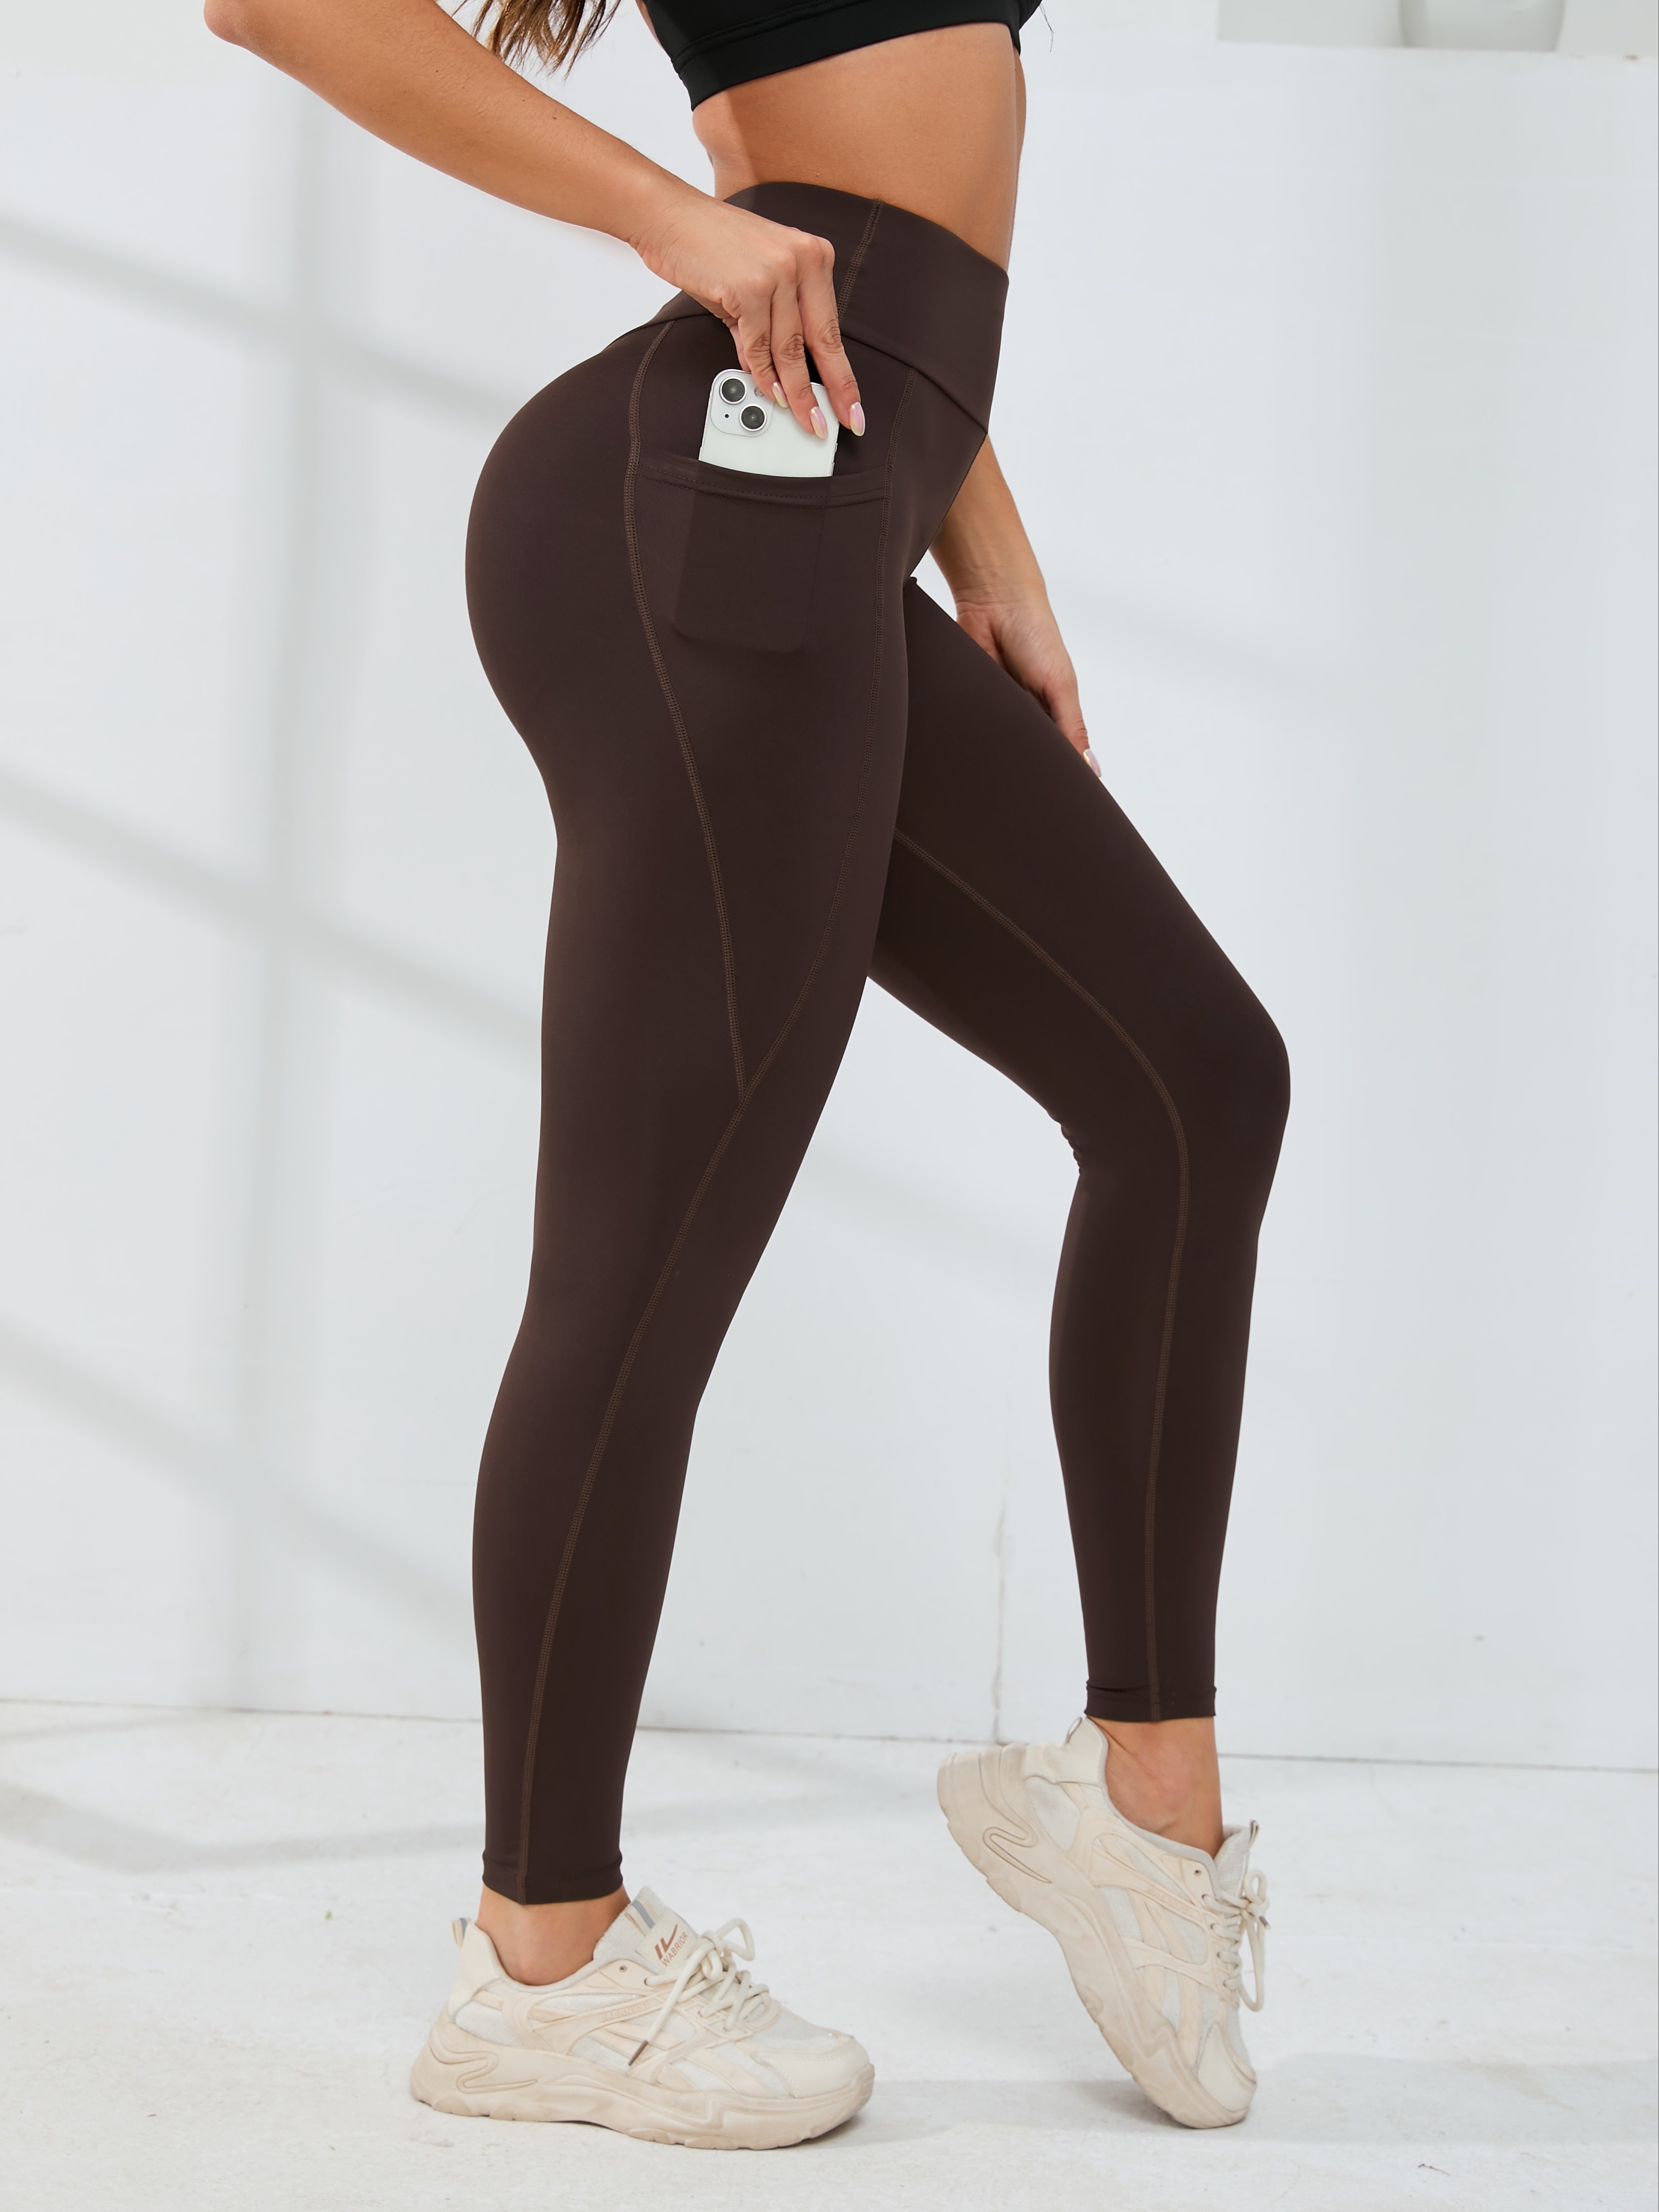 Brown Leggings for Women Yoga High Sport Women Pants Print Fashion